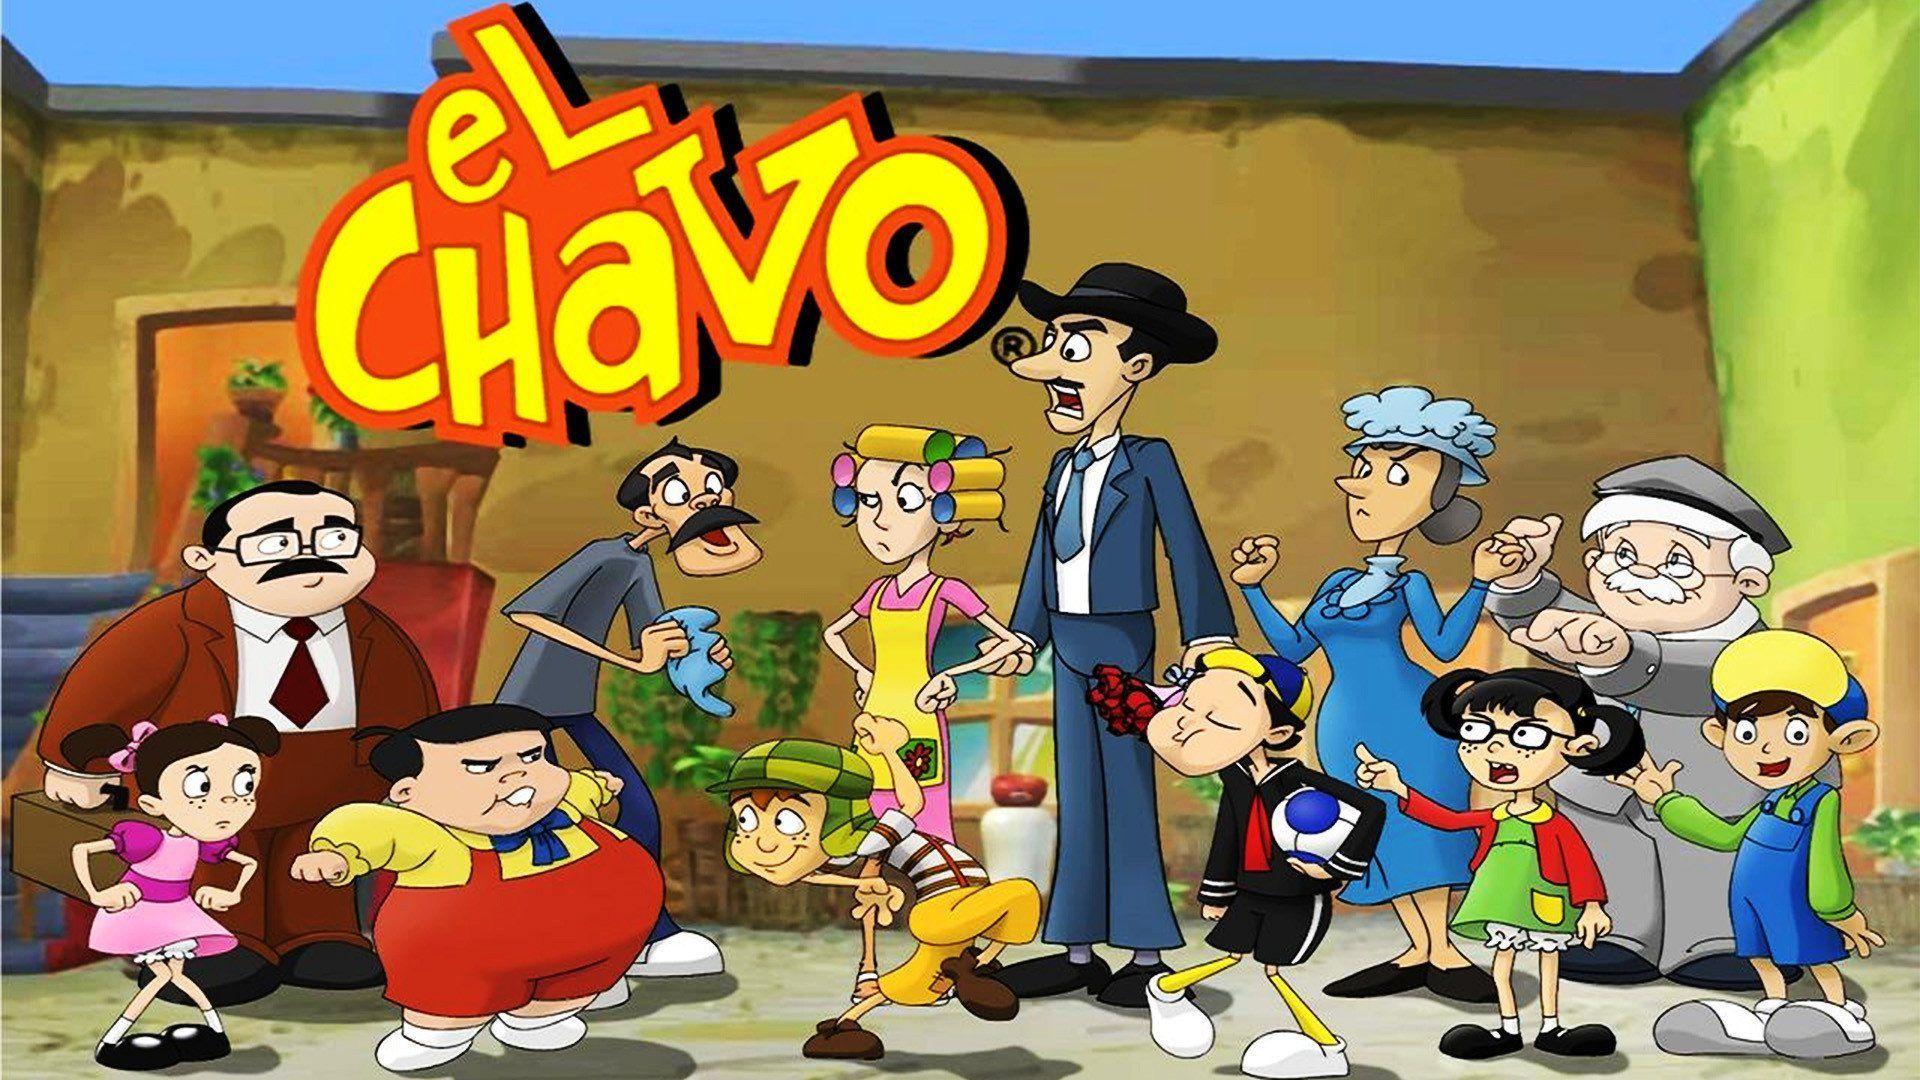 El Chavo del 8 Wallpapers Top Free El Chavo del 8 Backgrounds